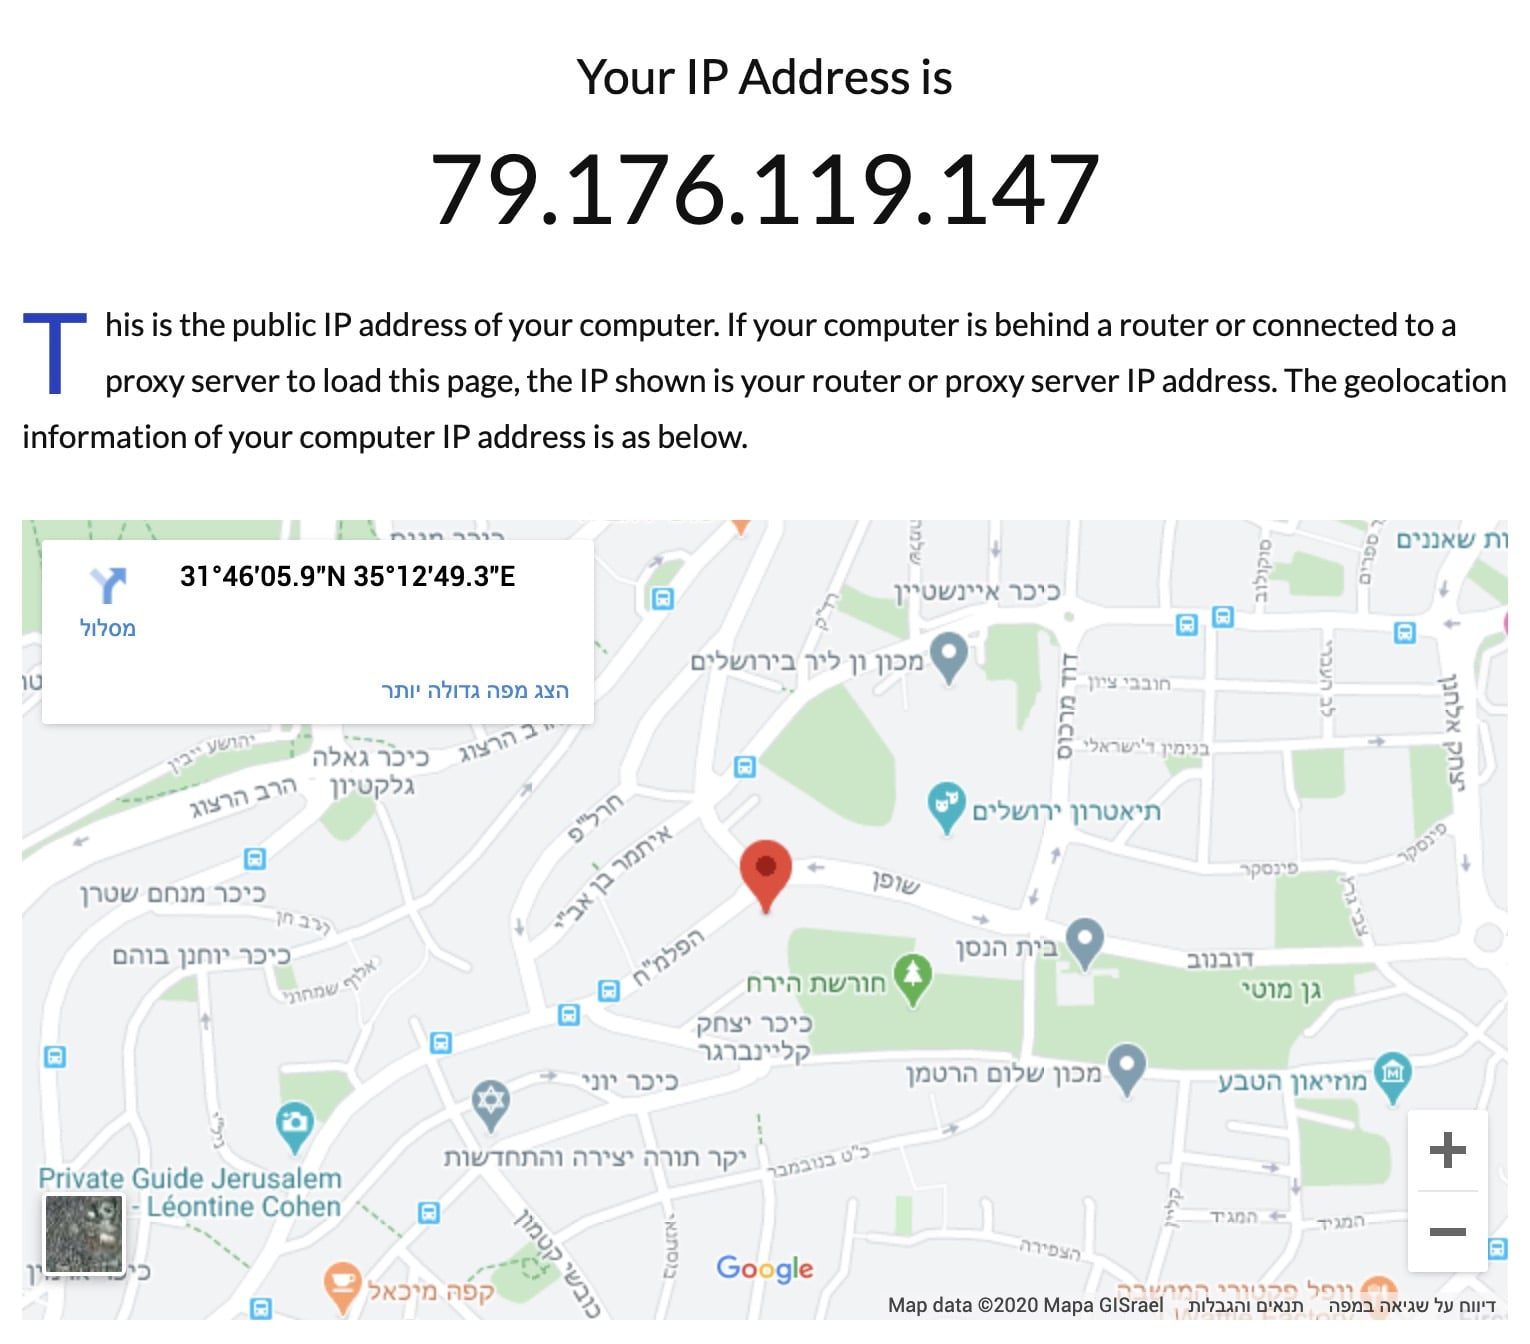 What my IP Address?